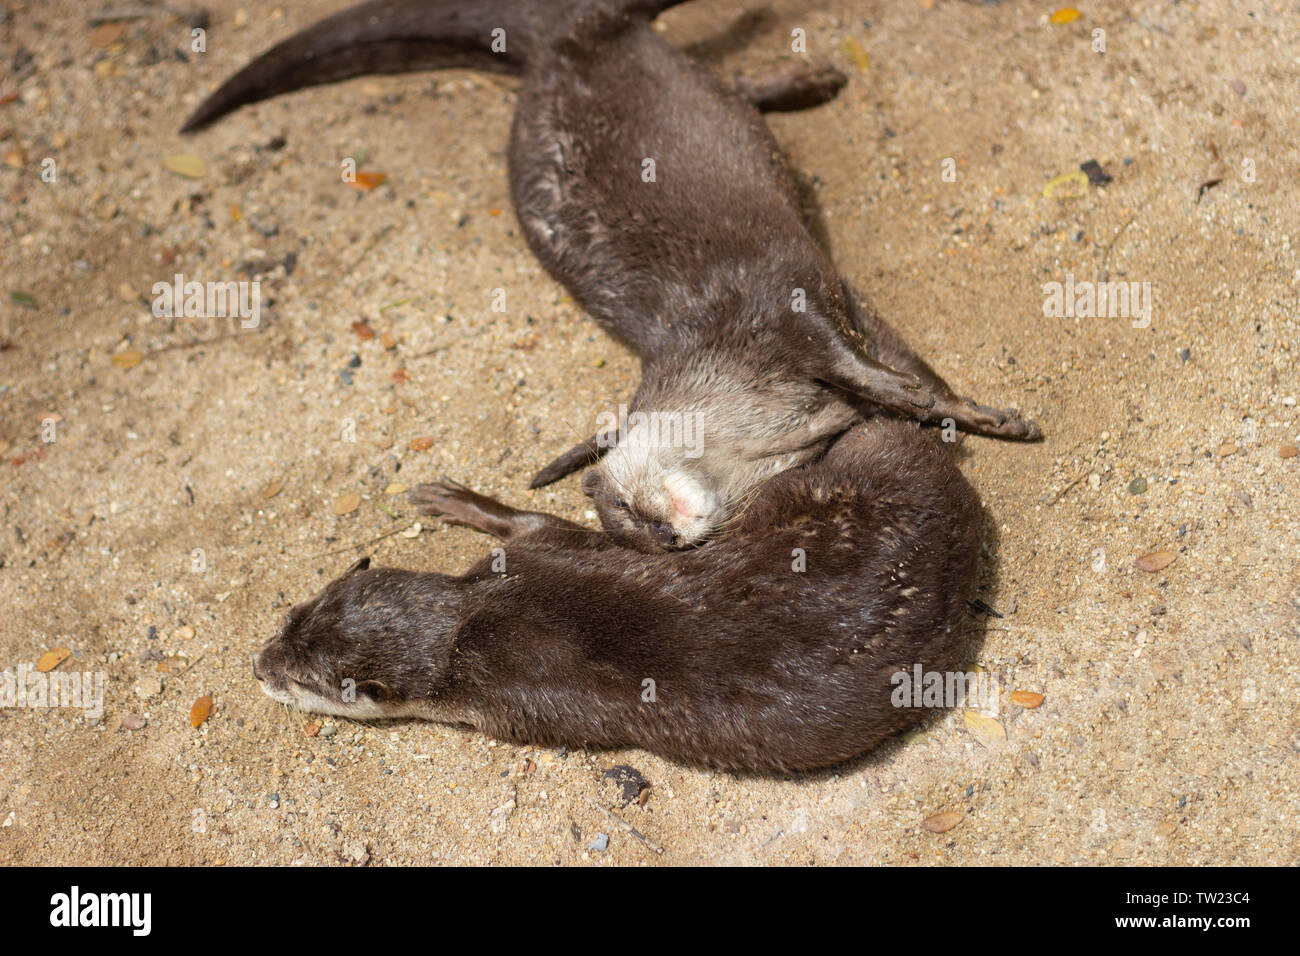 Otter säugetier Tier im Freien im Zoo Natur wildlife Konzept Stockfoto